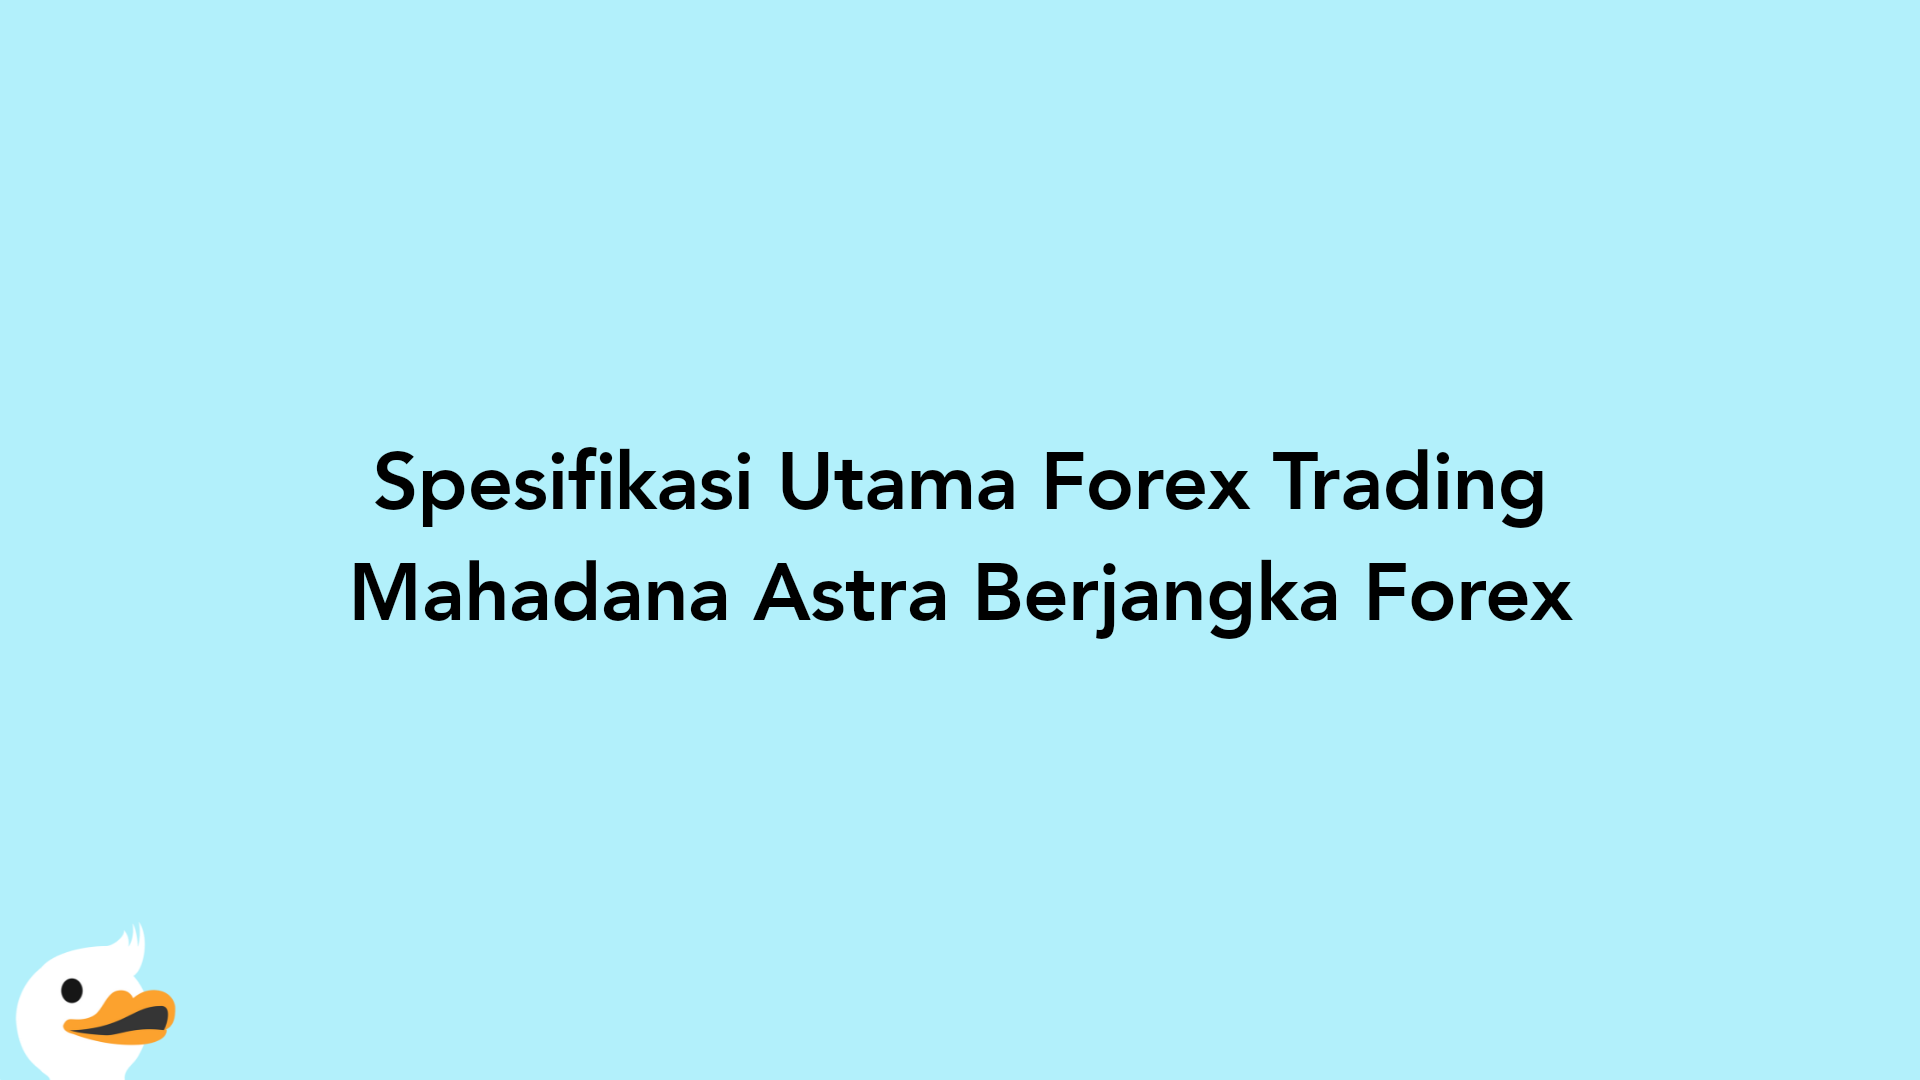 Spesifikasi Utama Forex Trading Mahadana Astra Berjangka Forex